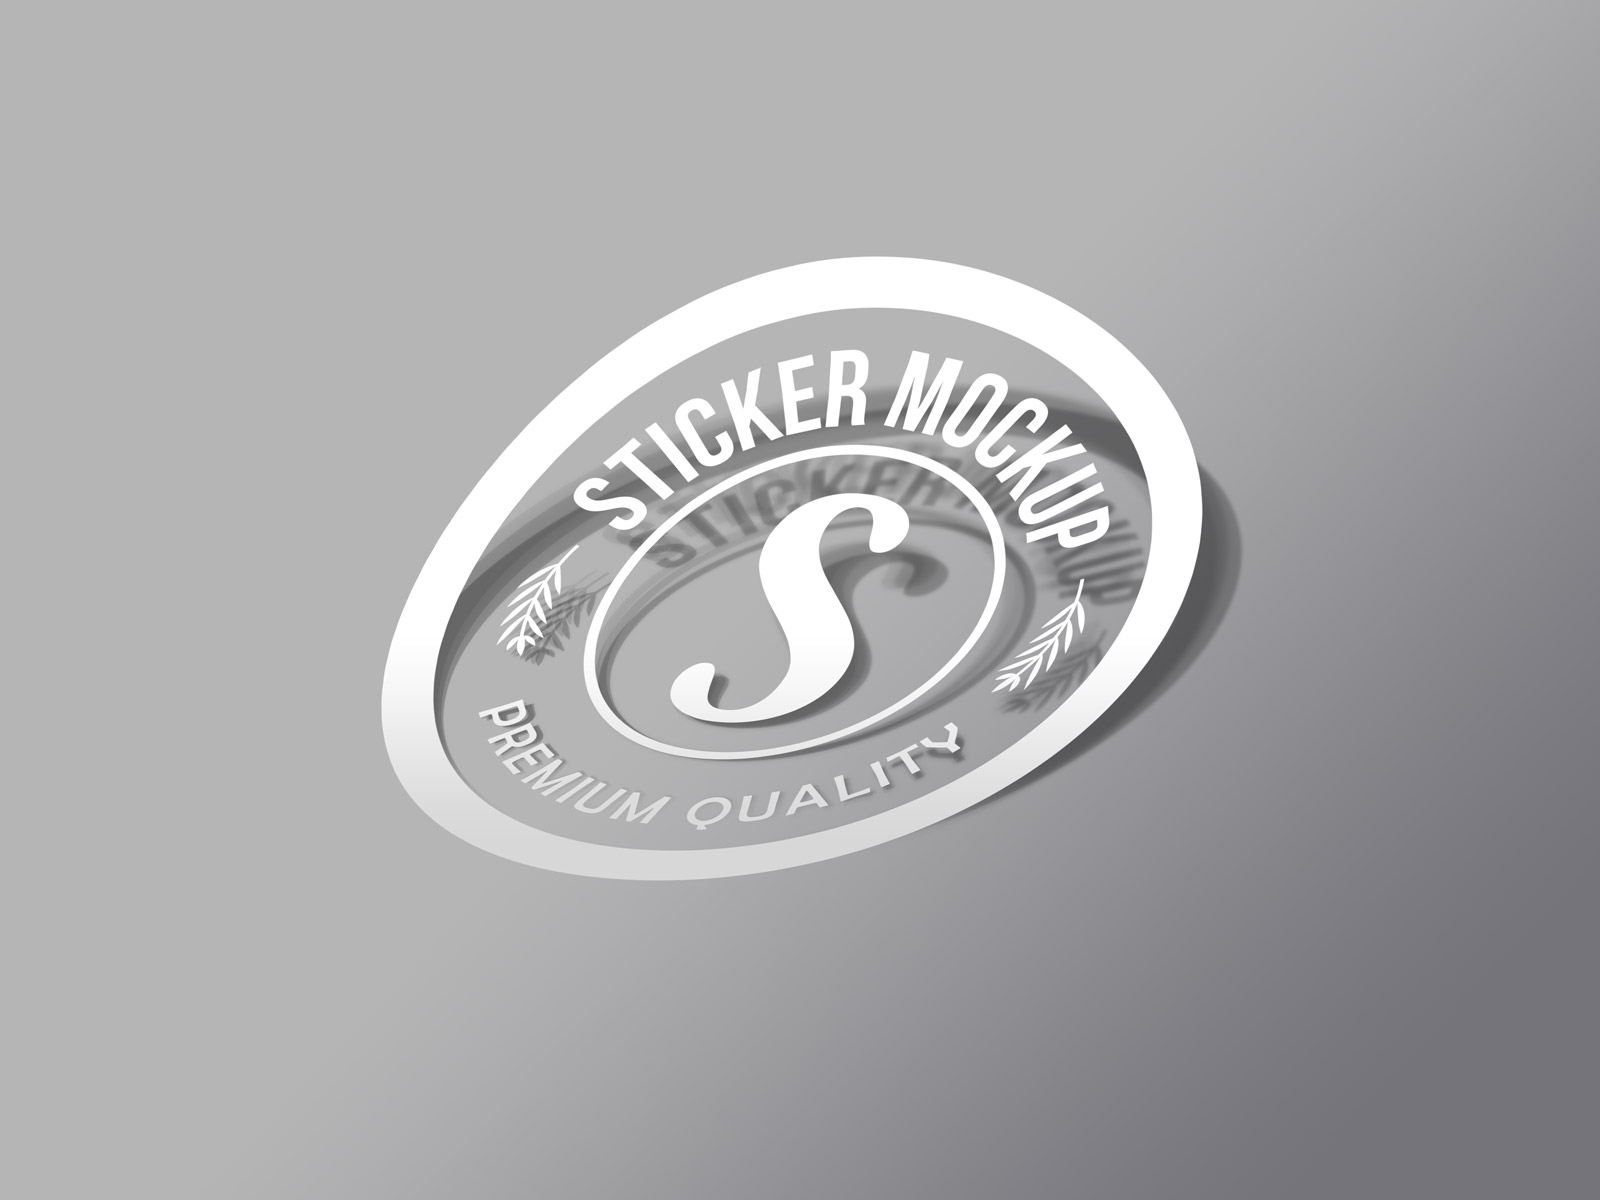 Free-Sticker-Mockup-PSD